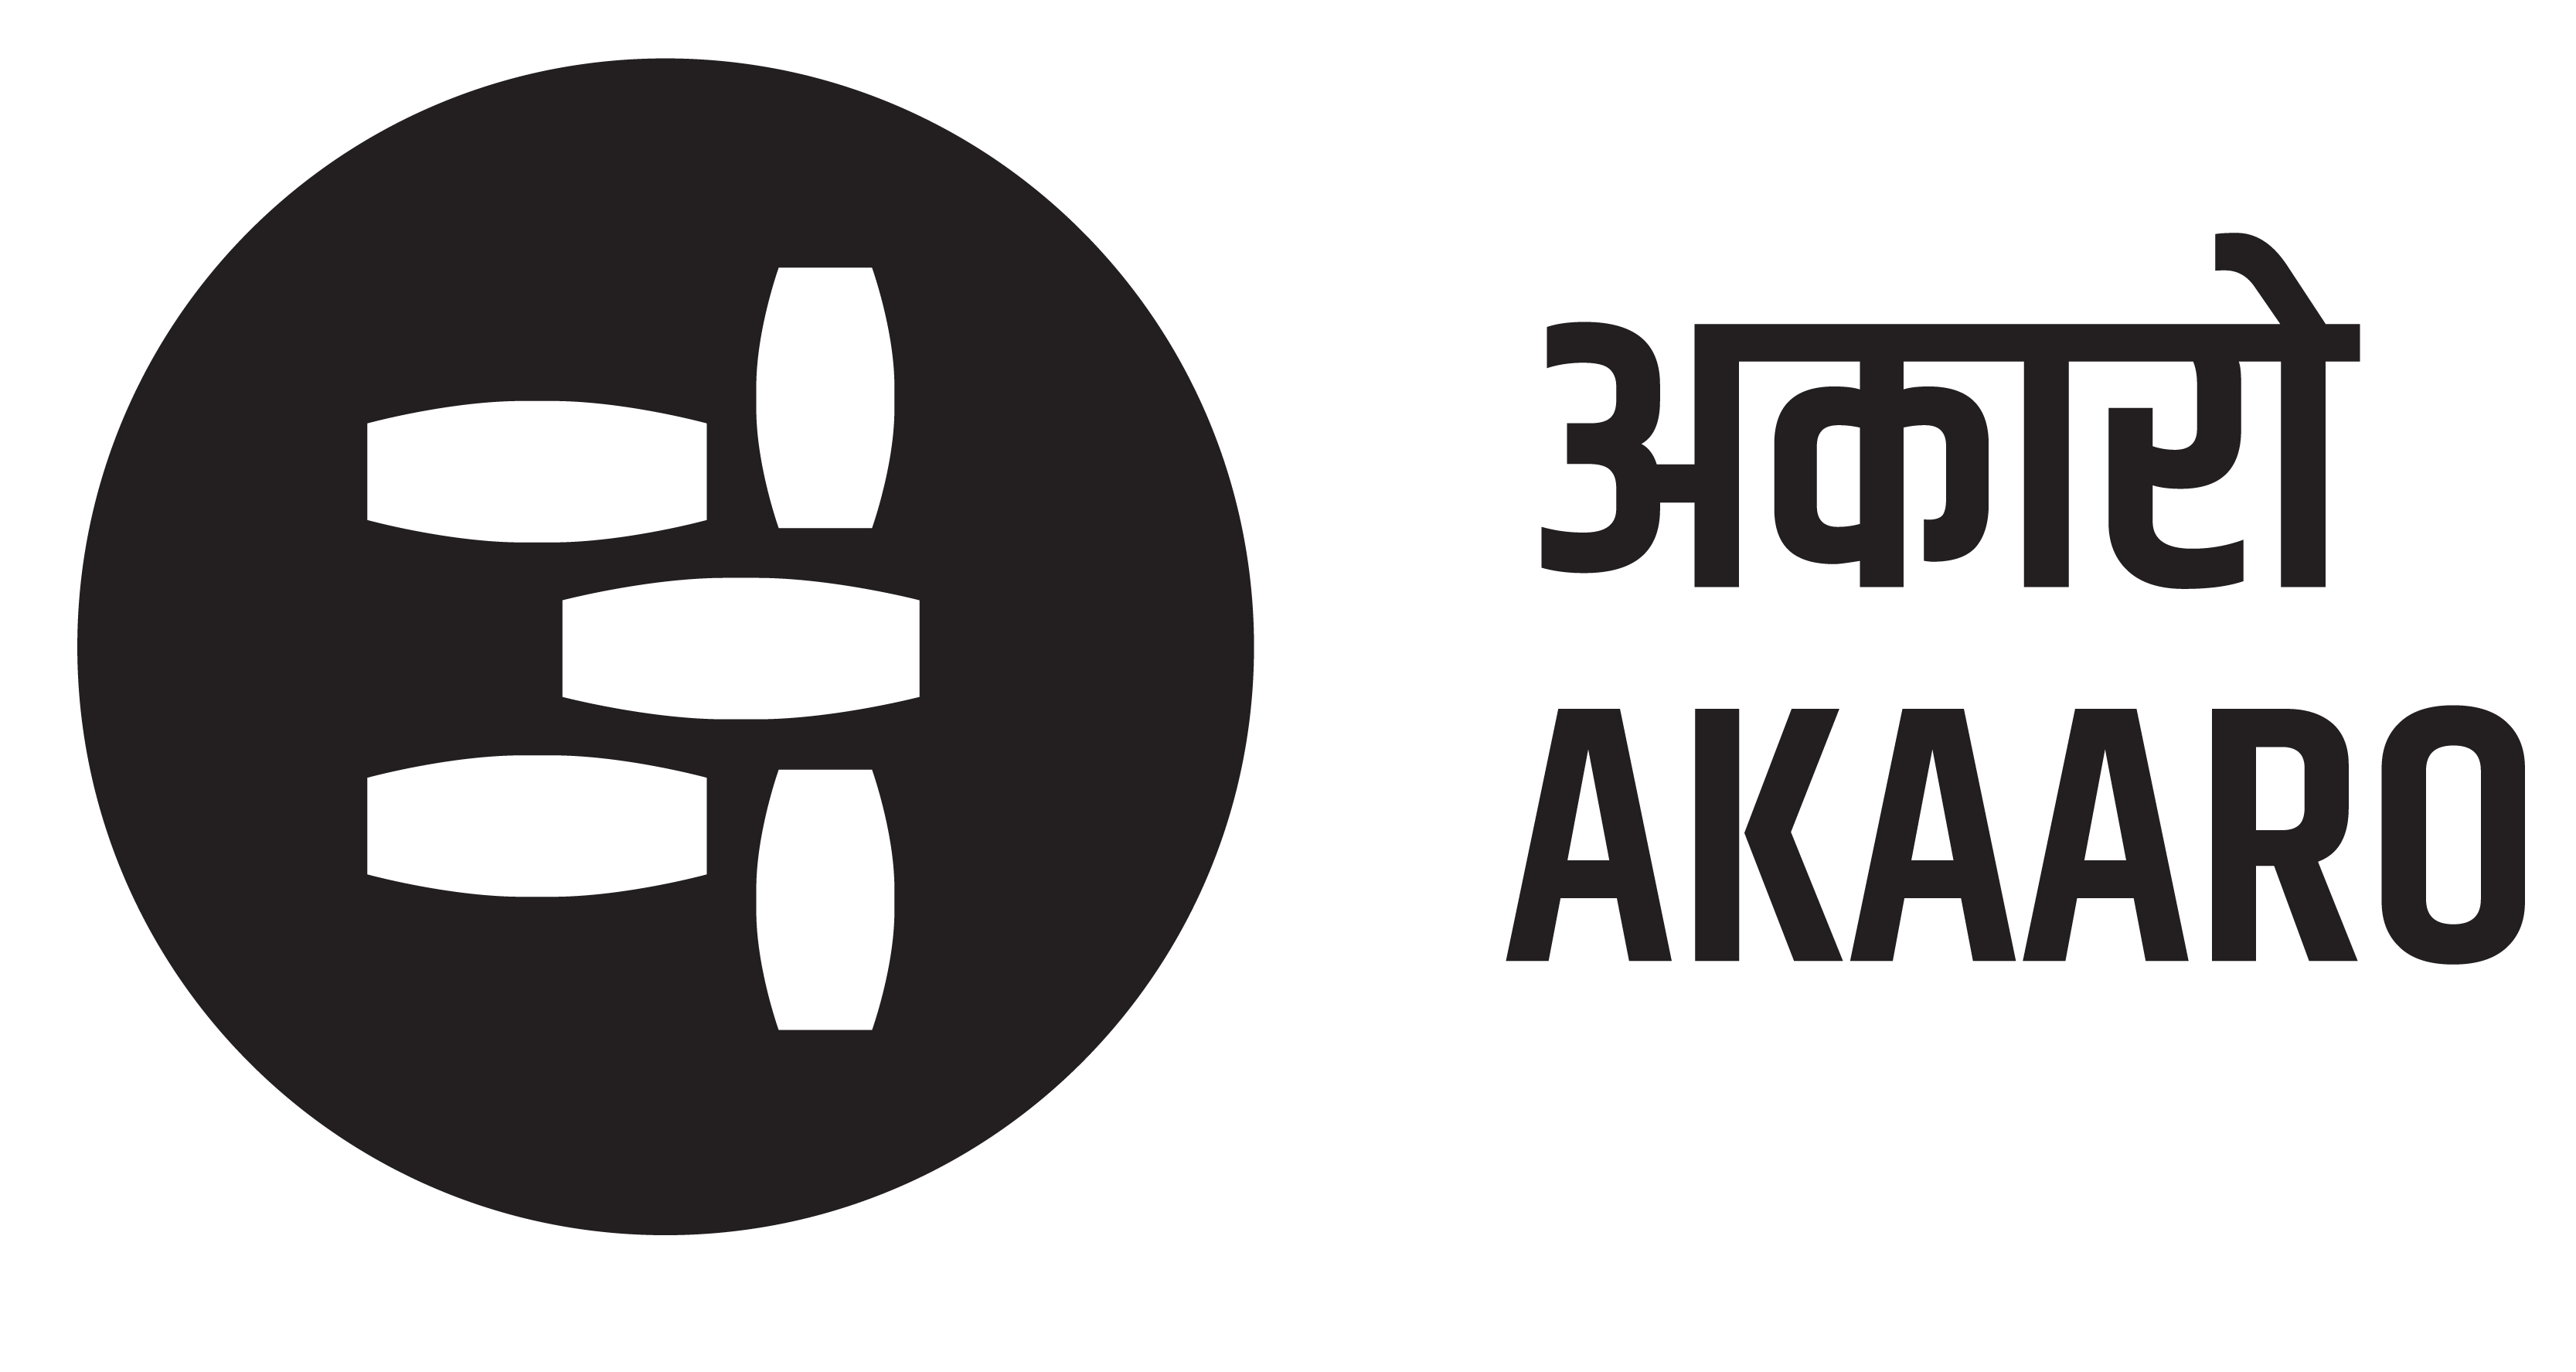 (c) Akaaro.com